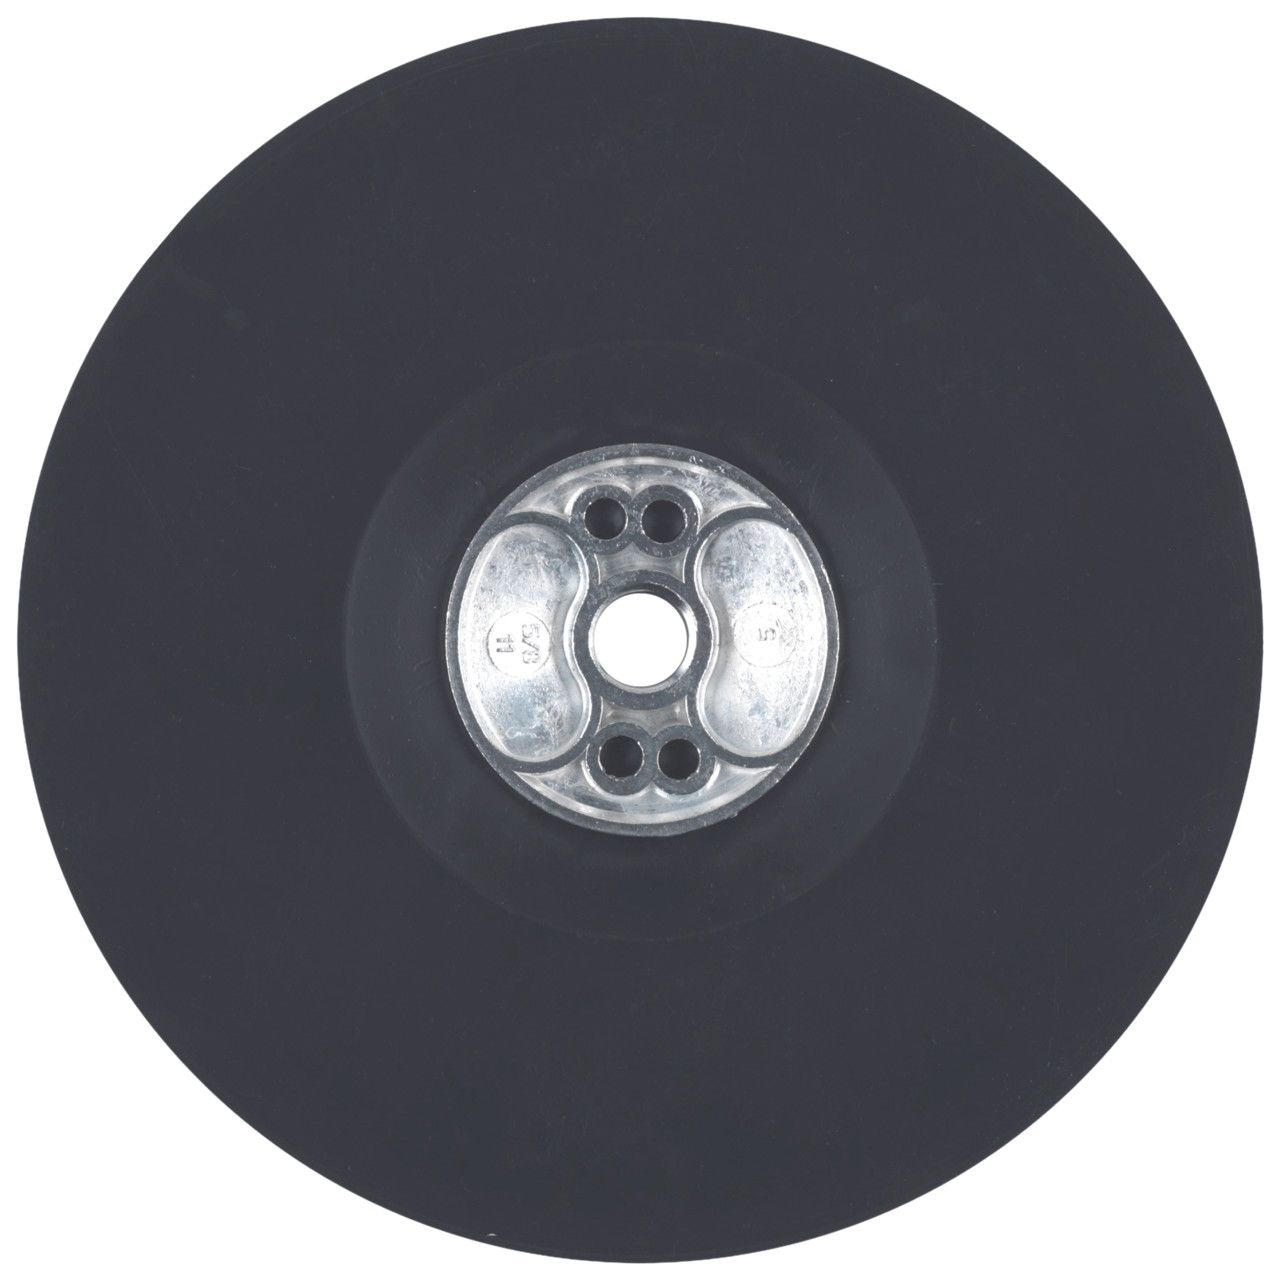 Tyrolit Accesorios para discos de fibra 125 x 22 #PAD FIBER 125x22 5/8 B HARD